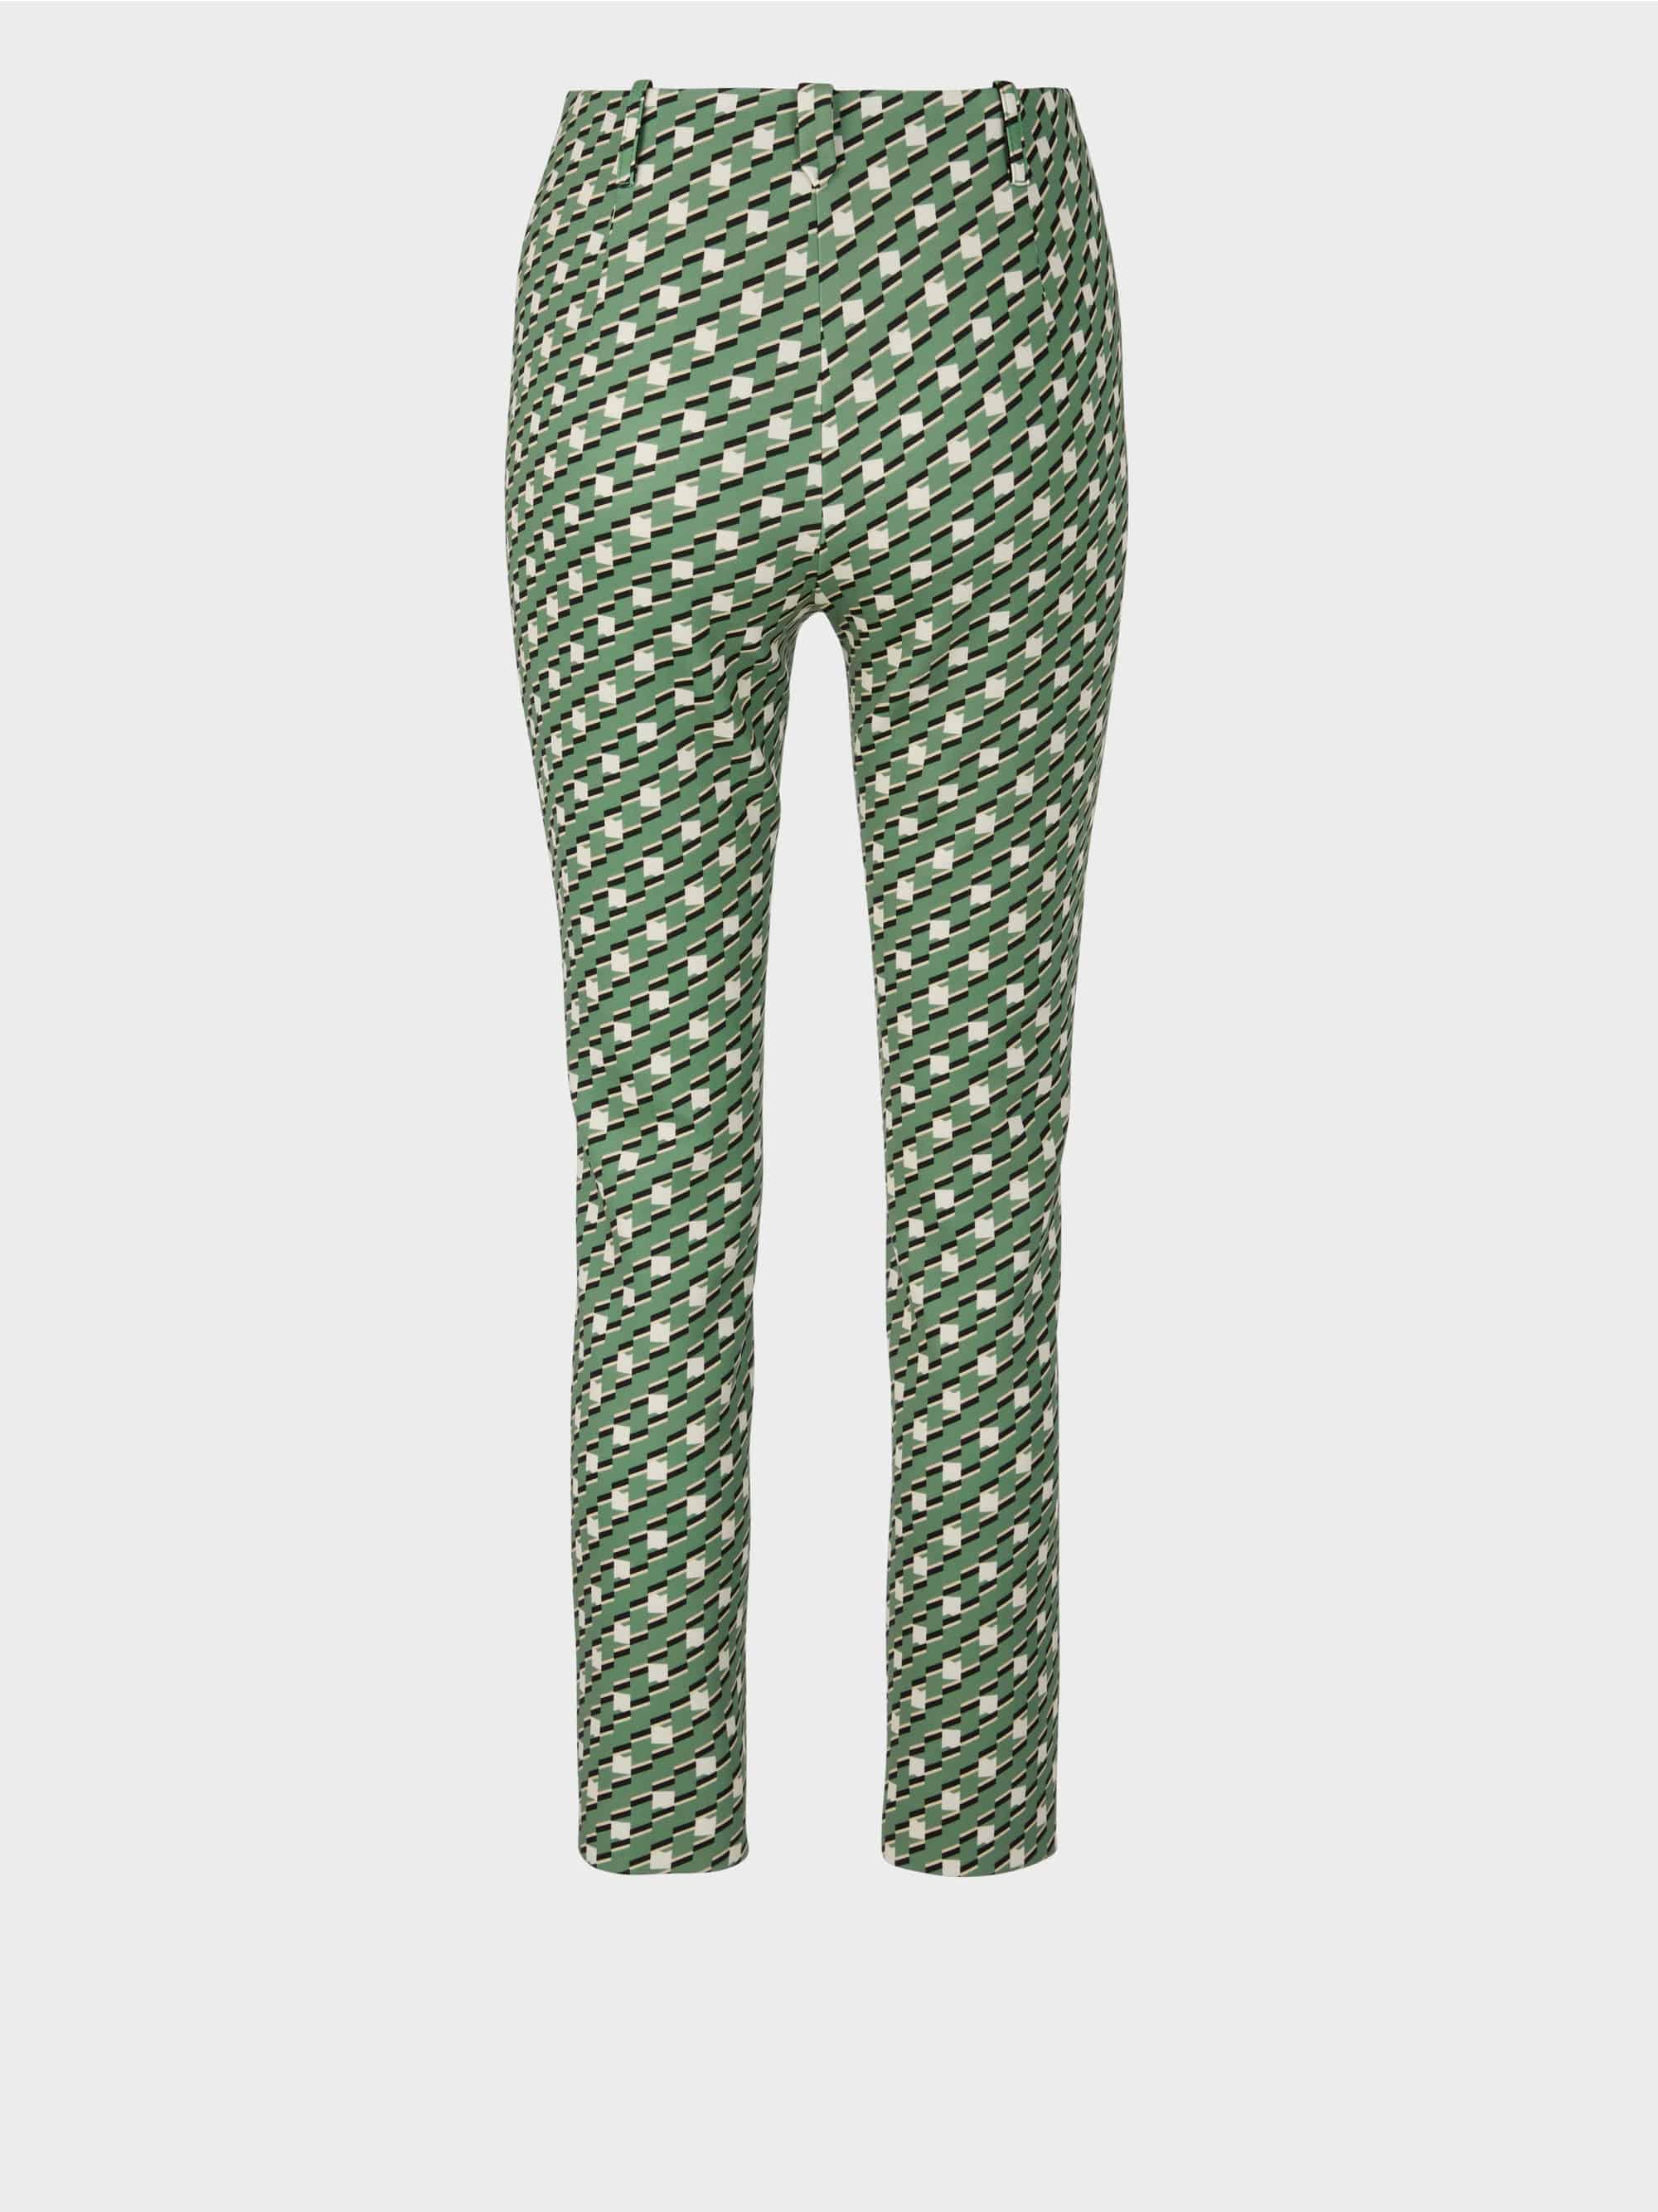 Pants In A Geometric Pattern